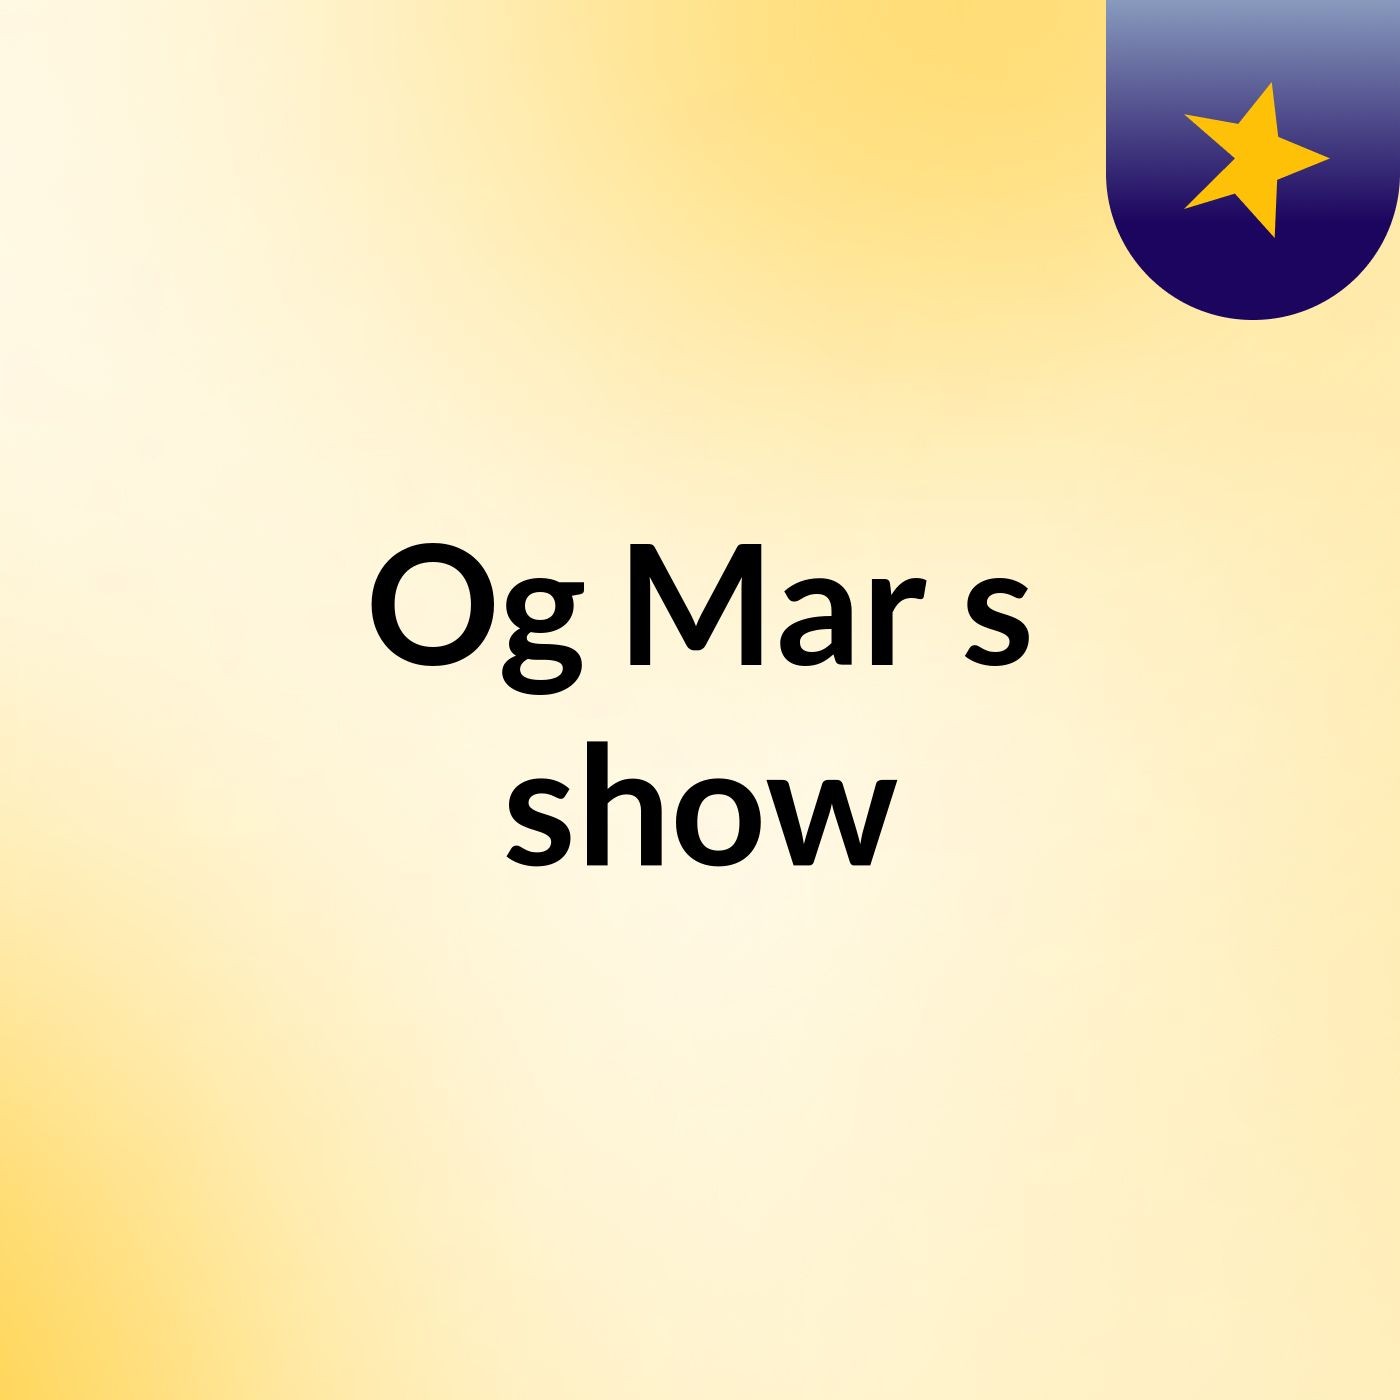 Og Mar's show